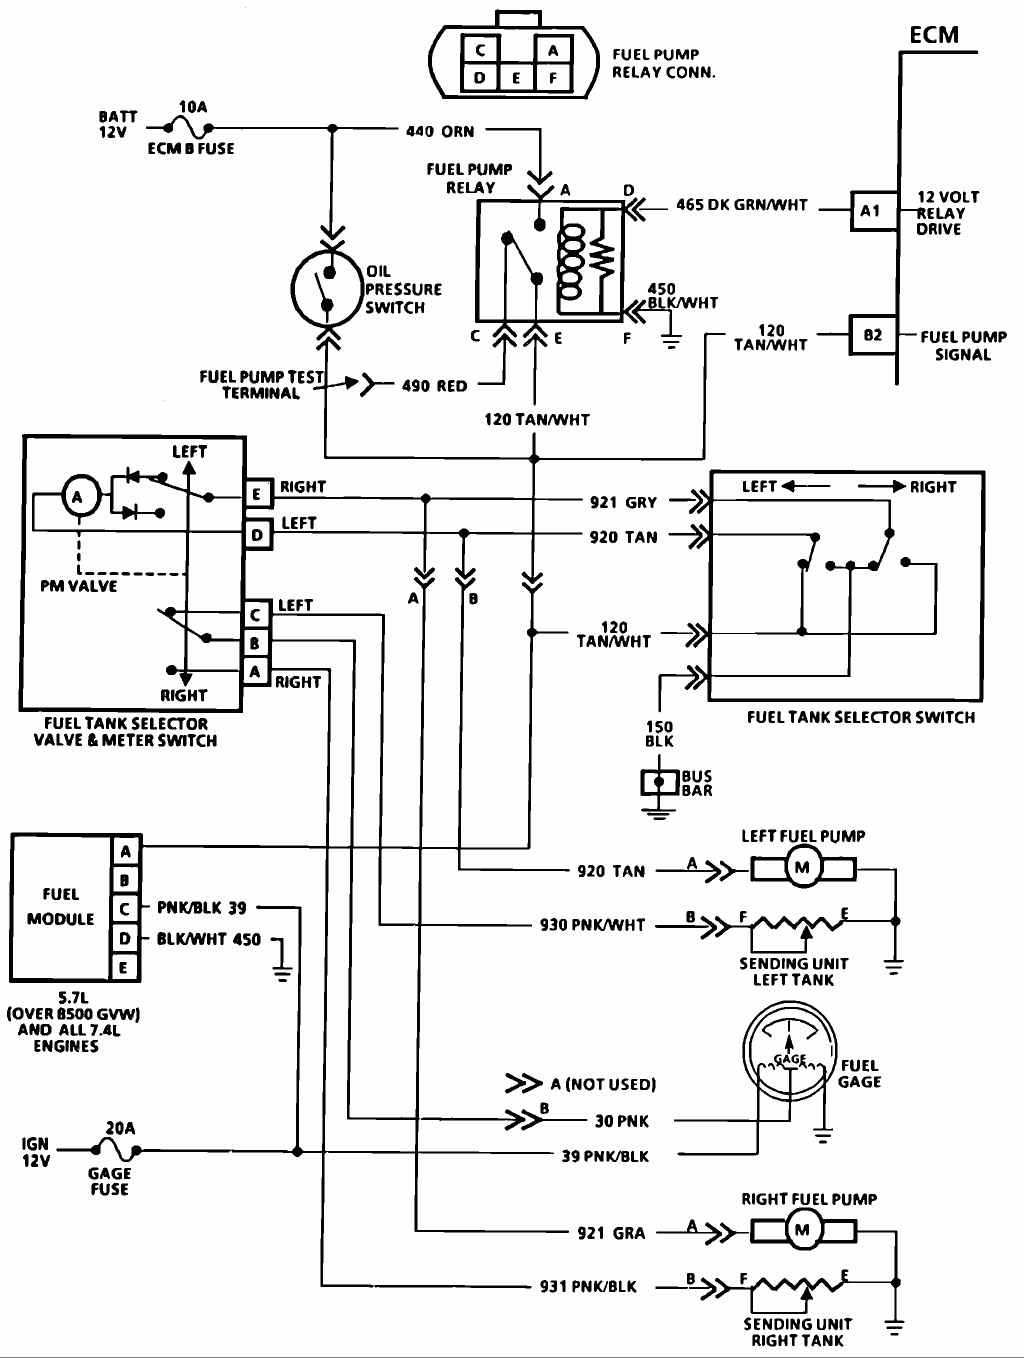 Gmc Pickup Wiring Diagrams | Wiring Library - Fuel Pump Wiring Diagram